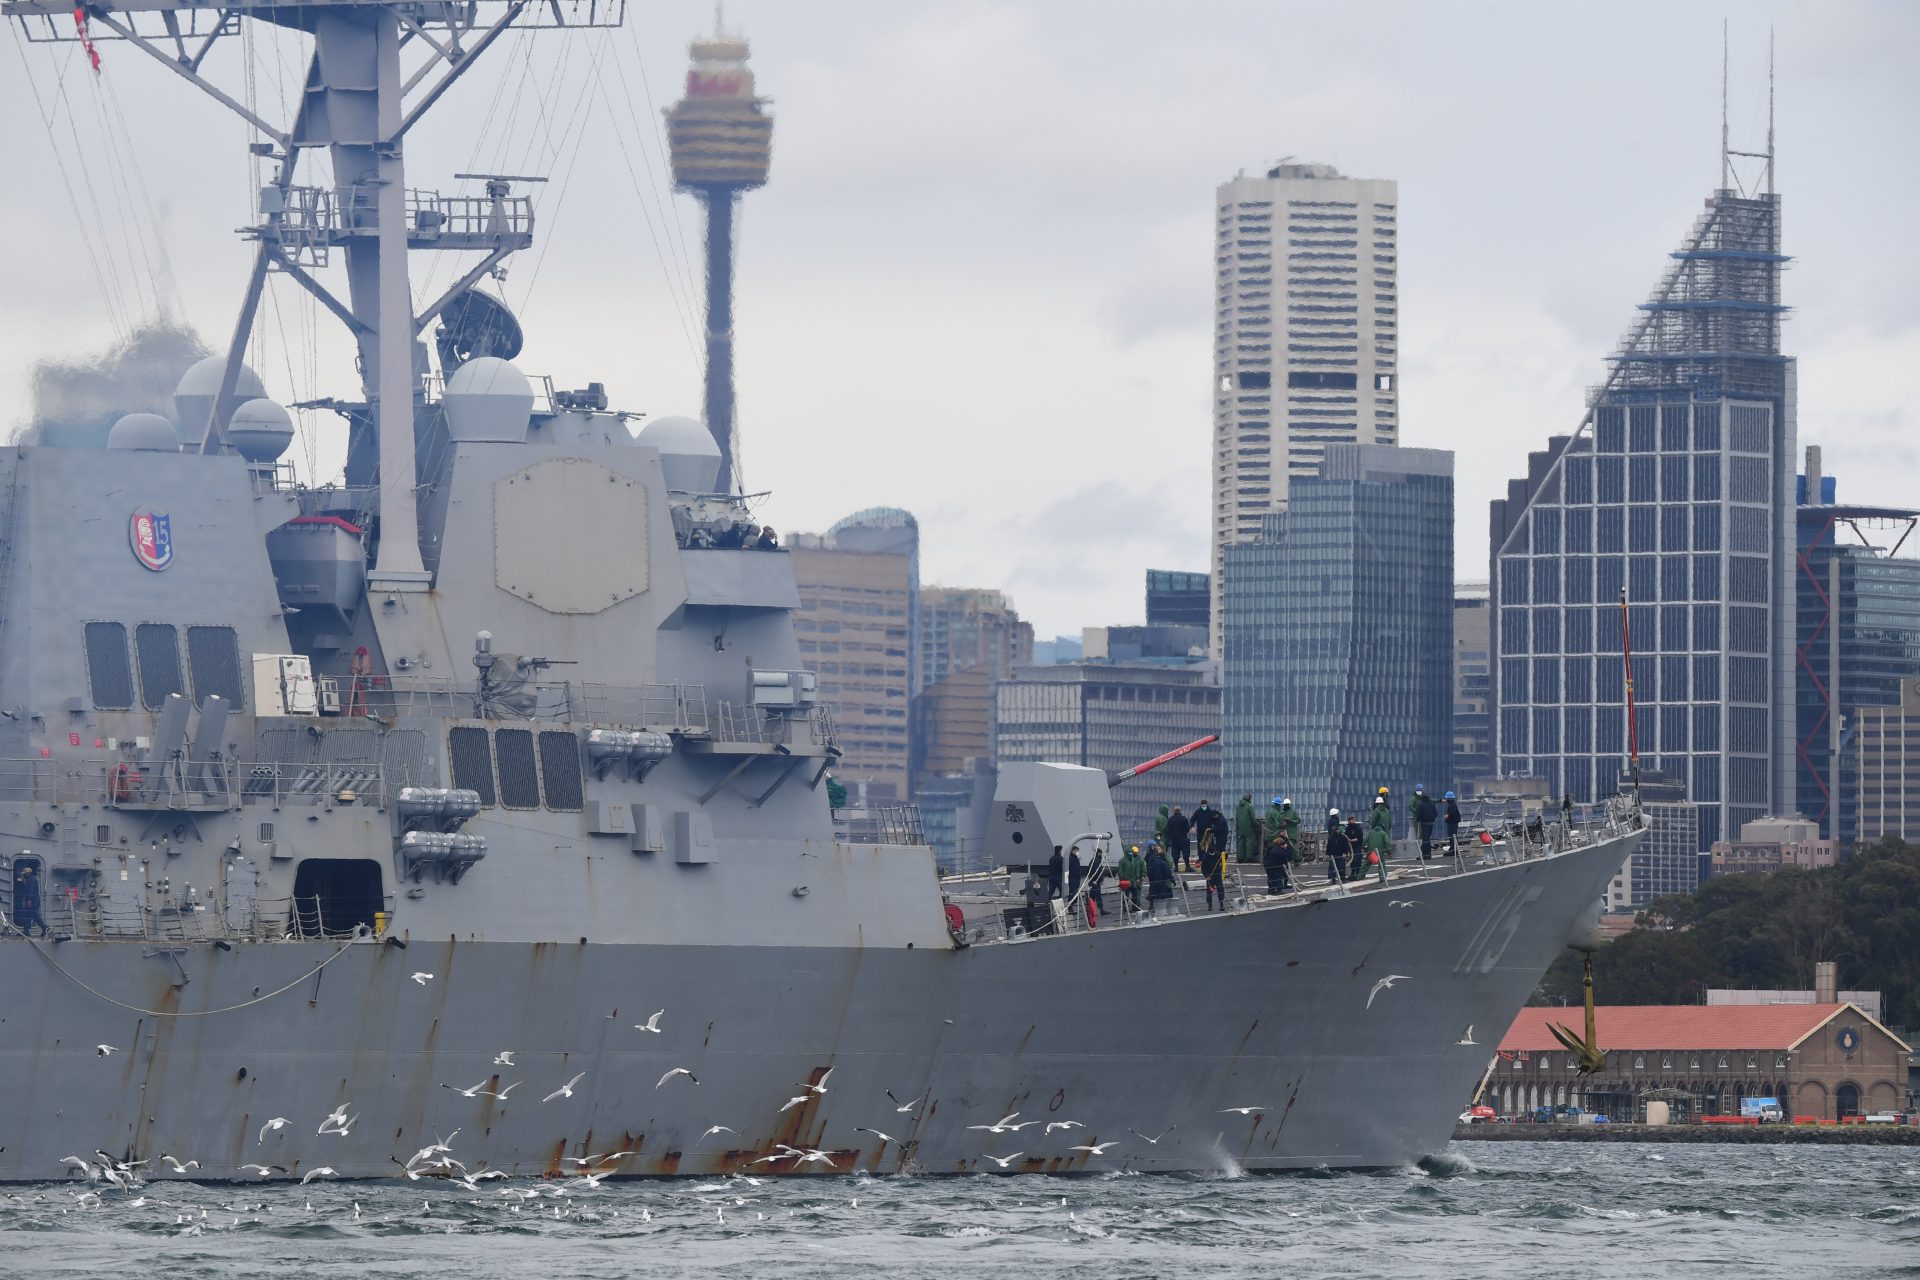 Step one: update Australia's destroyers